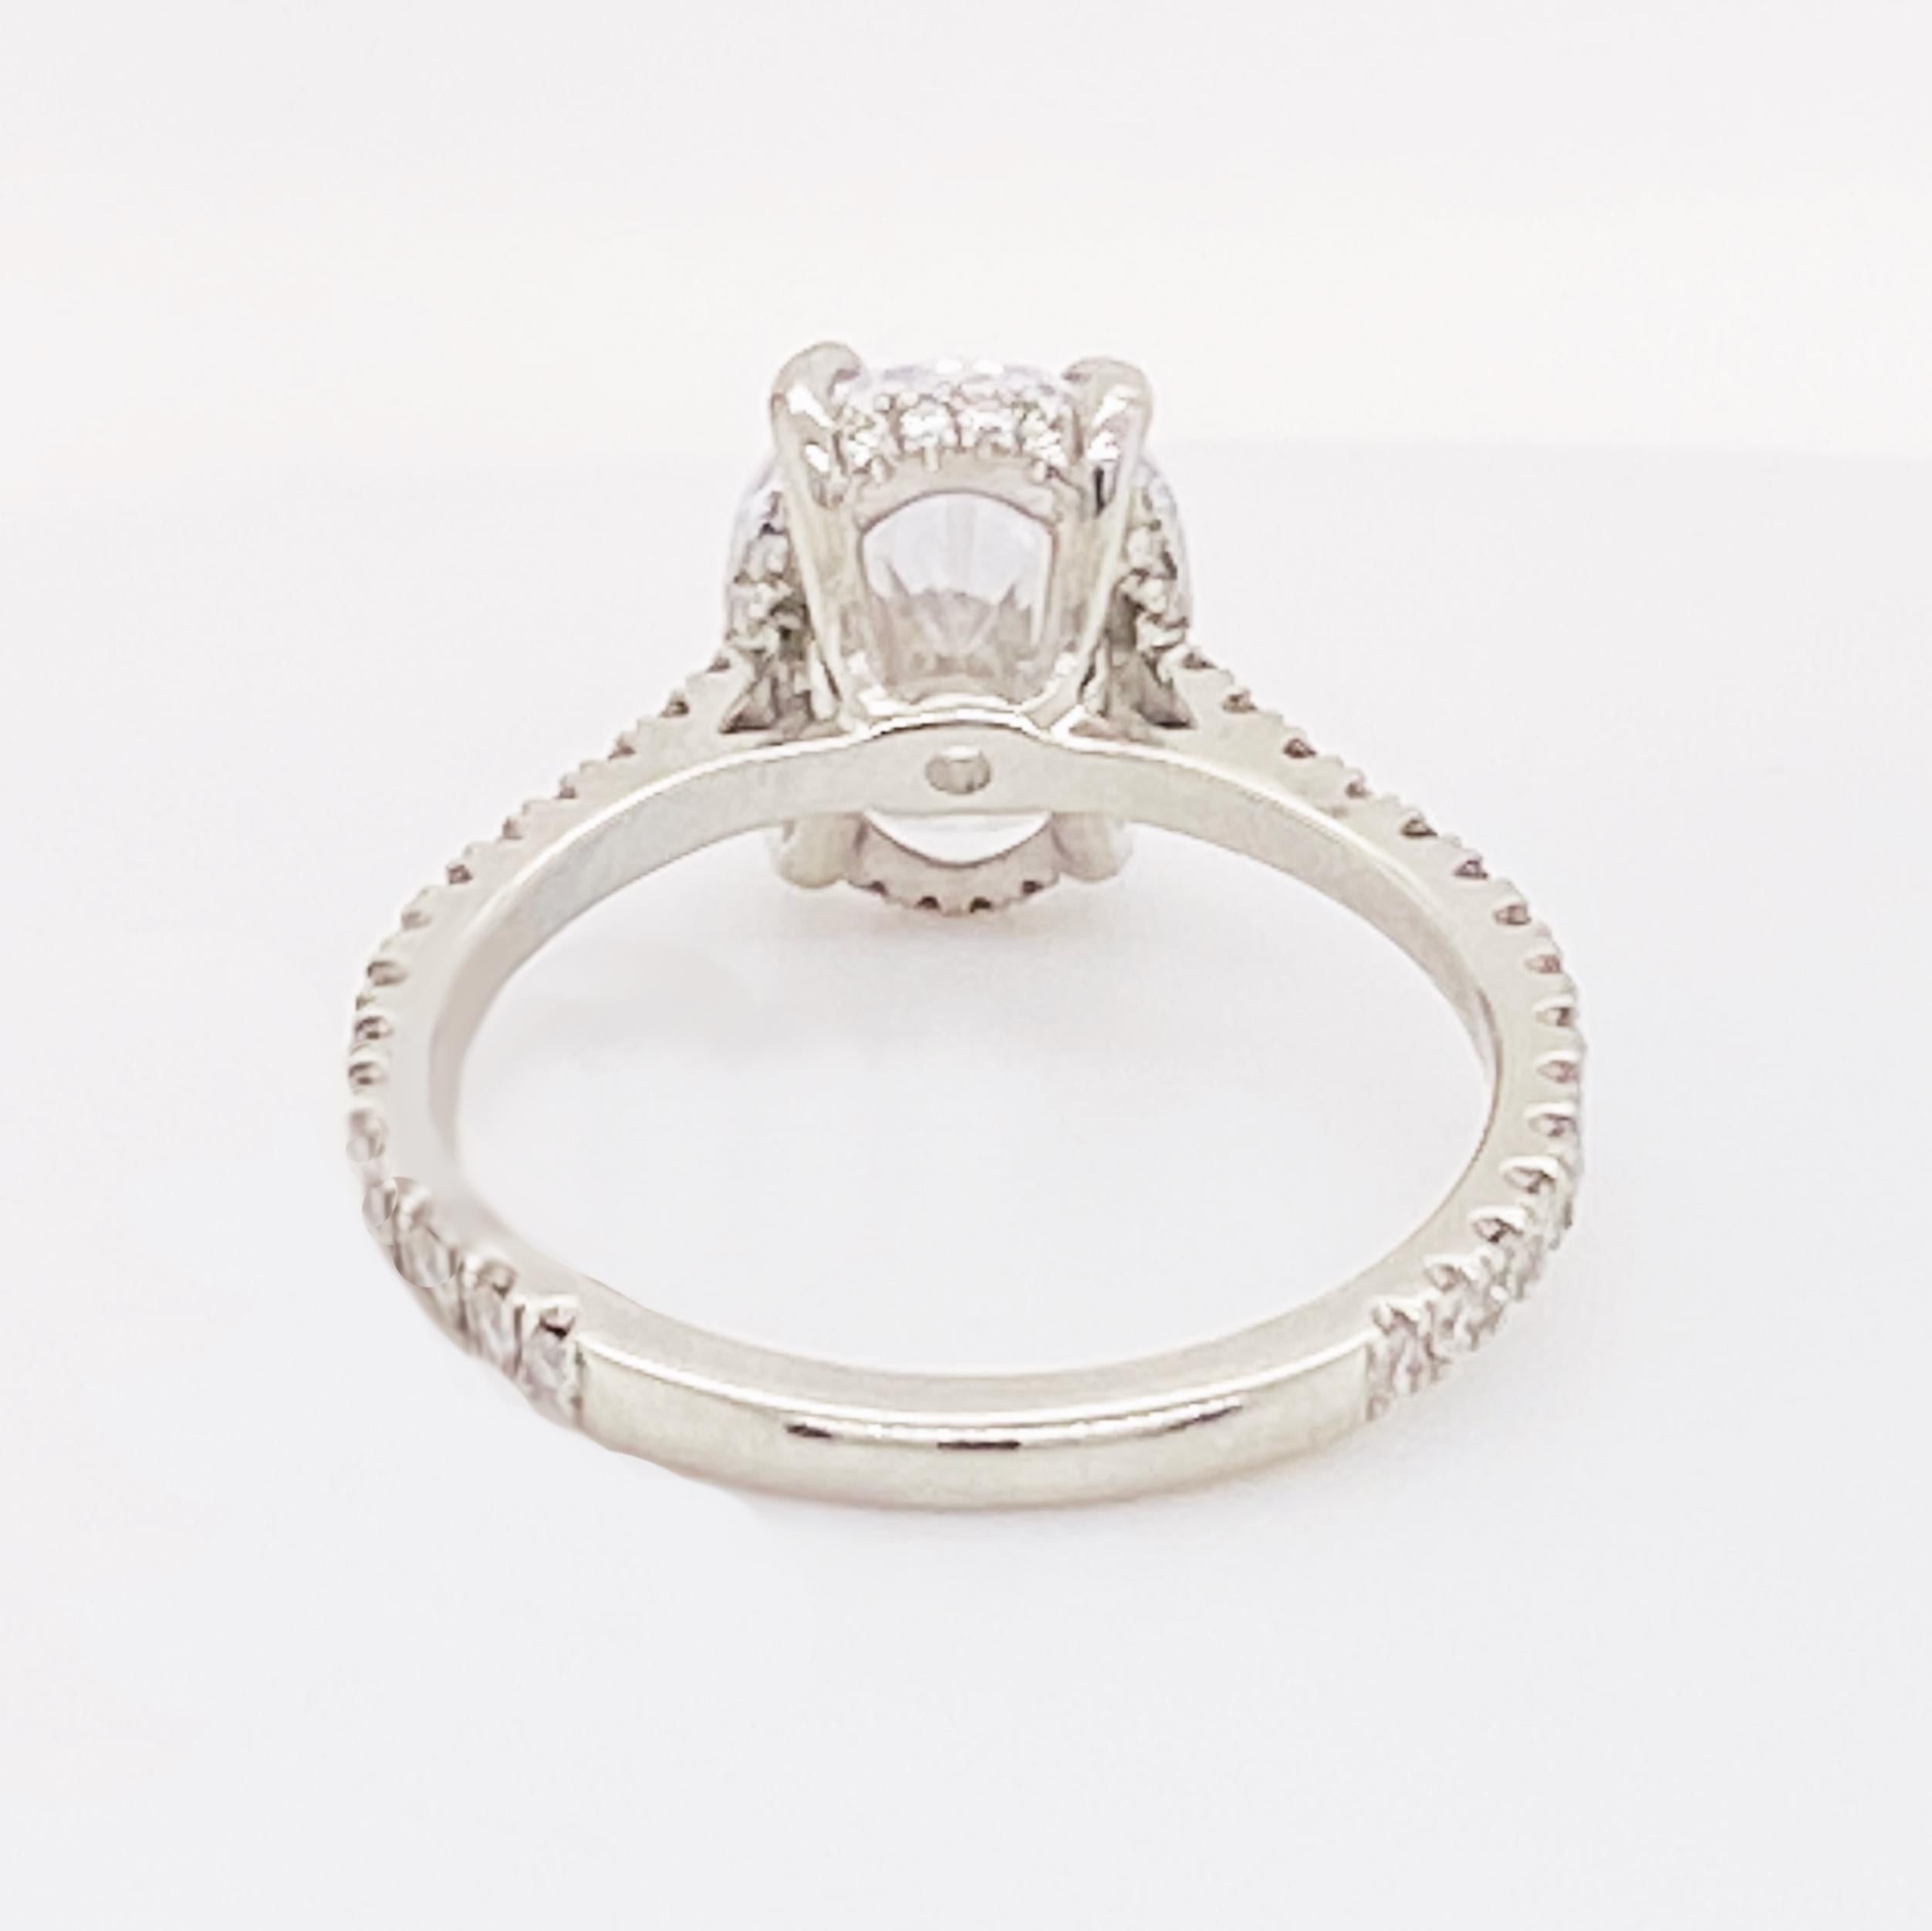 For Sale:  3.50 Carat Oval Diamond Engagement Ring Diamonds on Band 19 Karat Gold 3